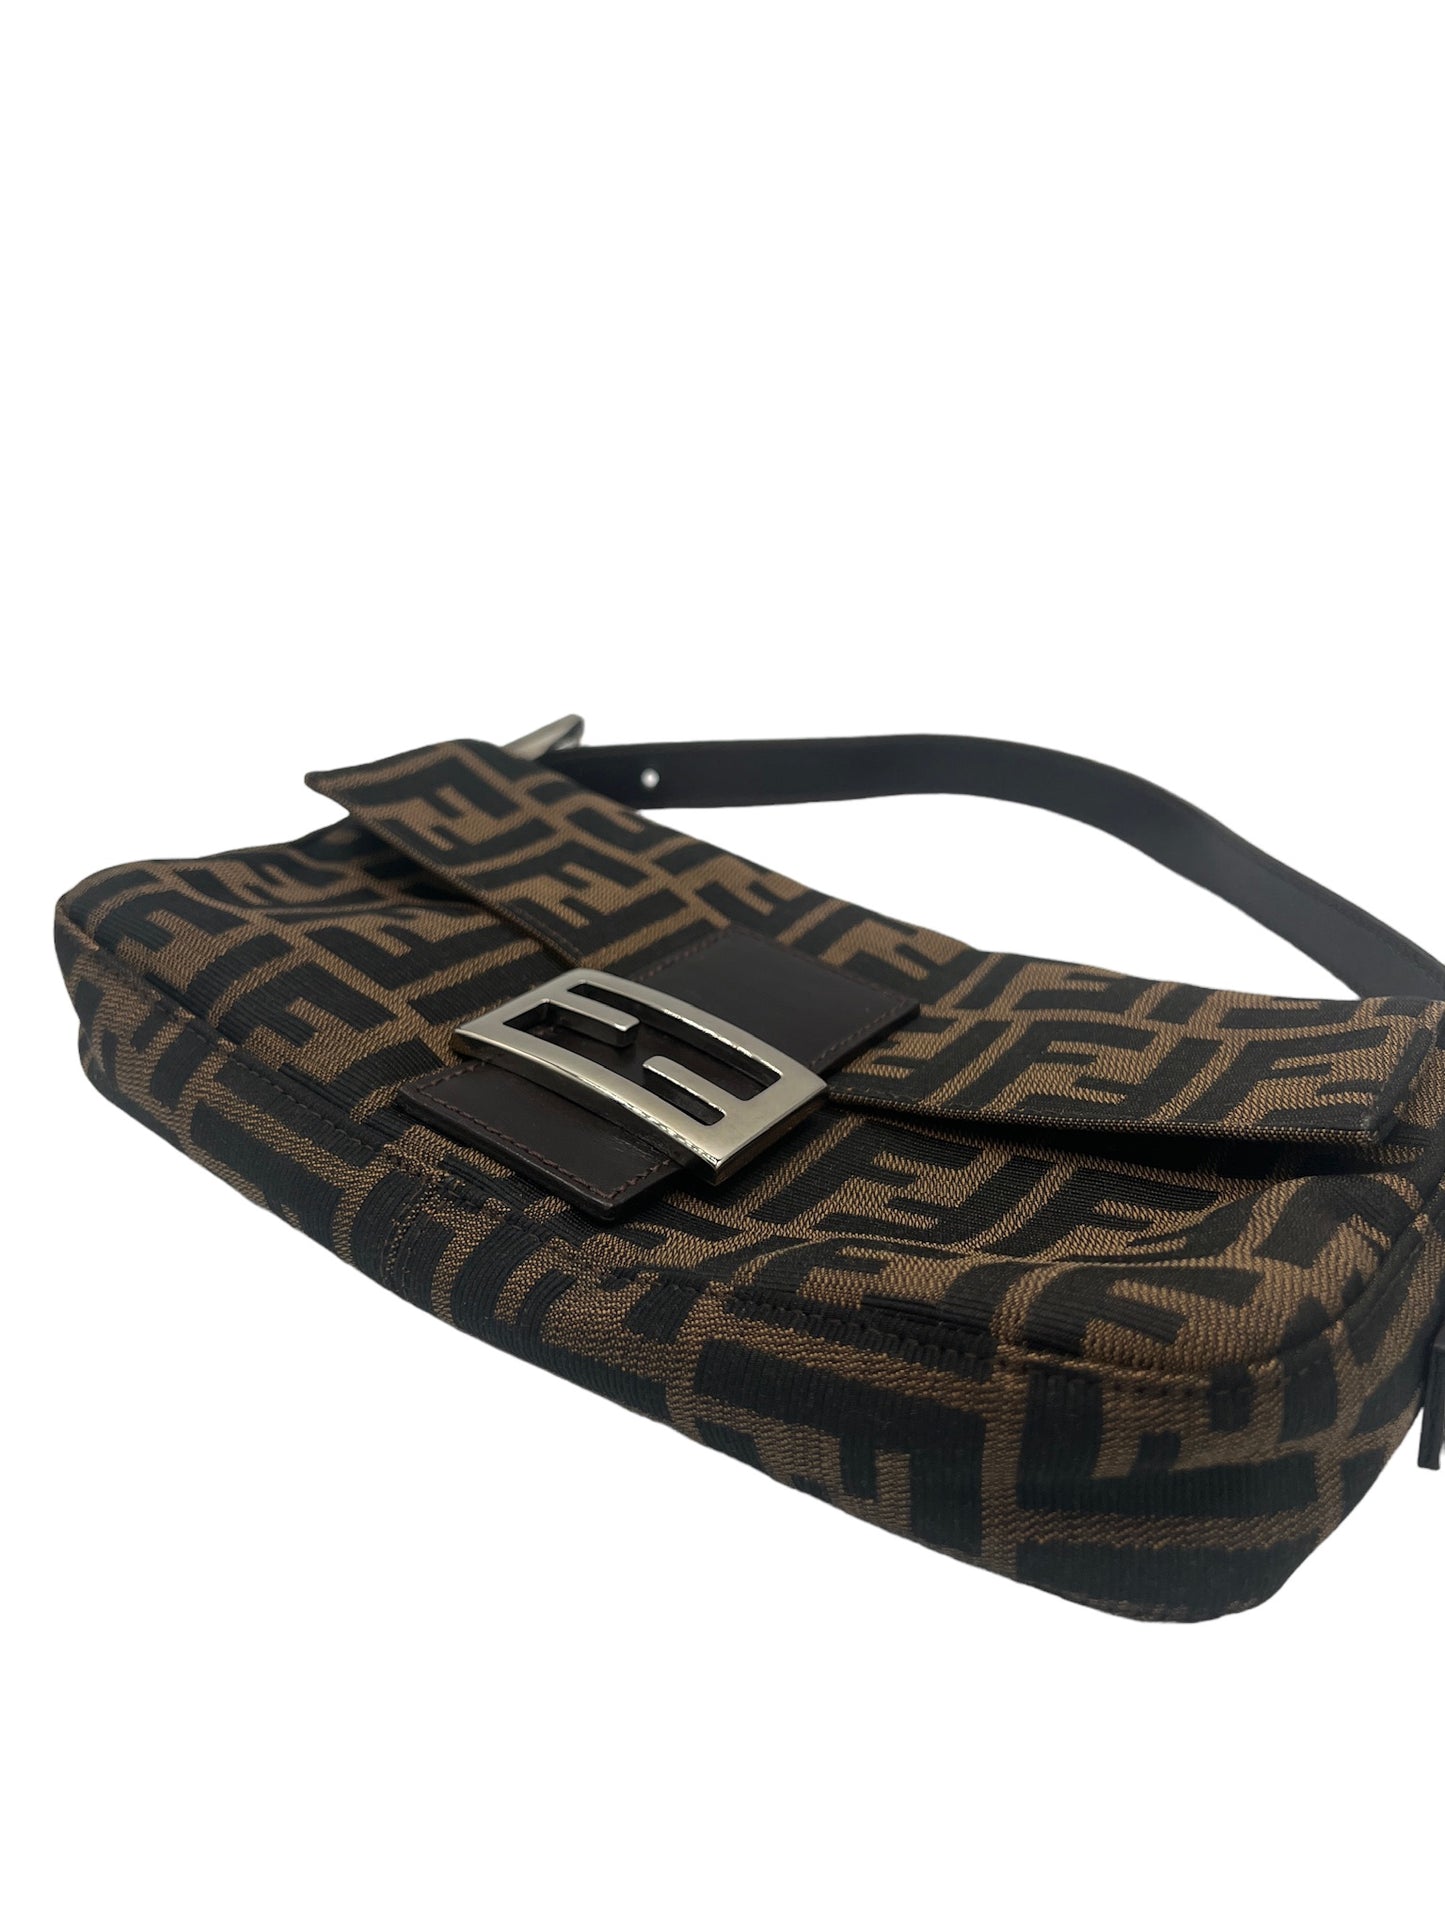 FENDI - Baguette Handbag